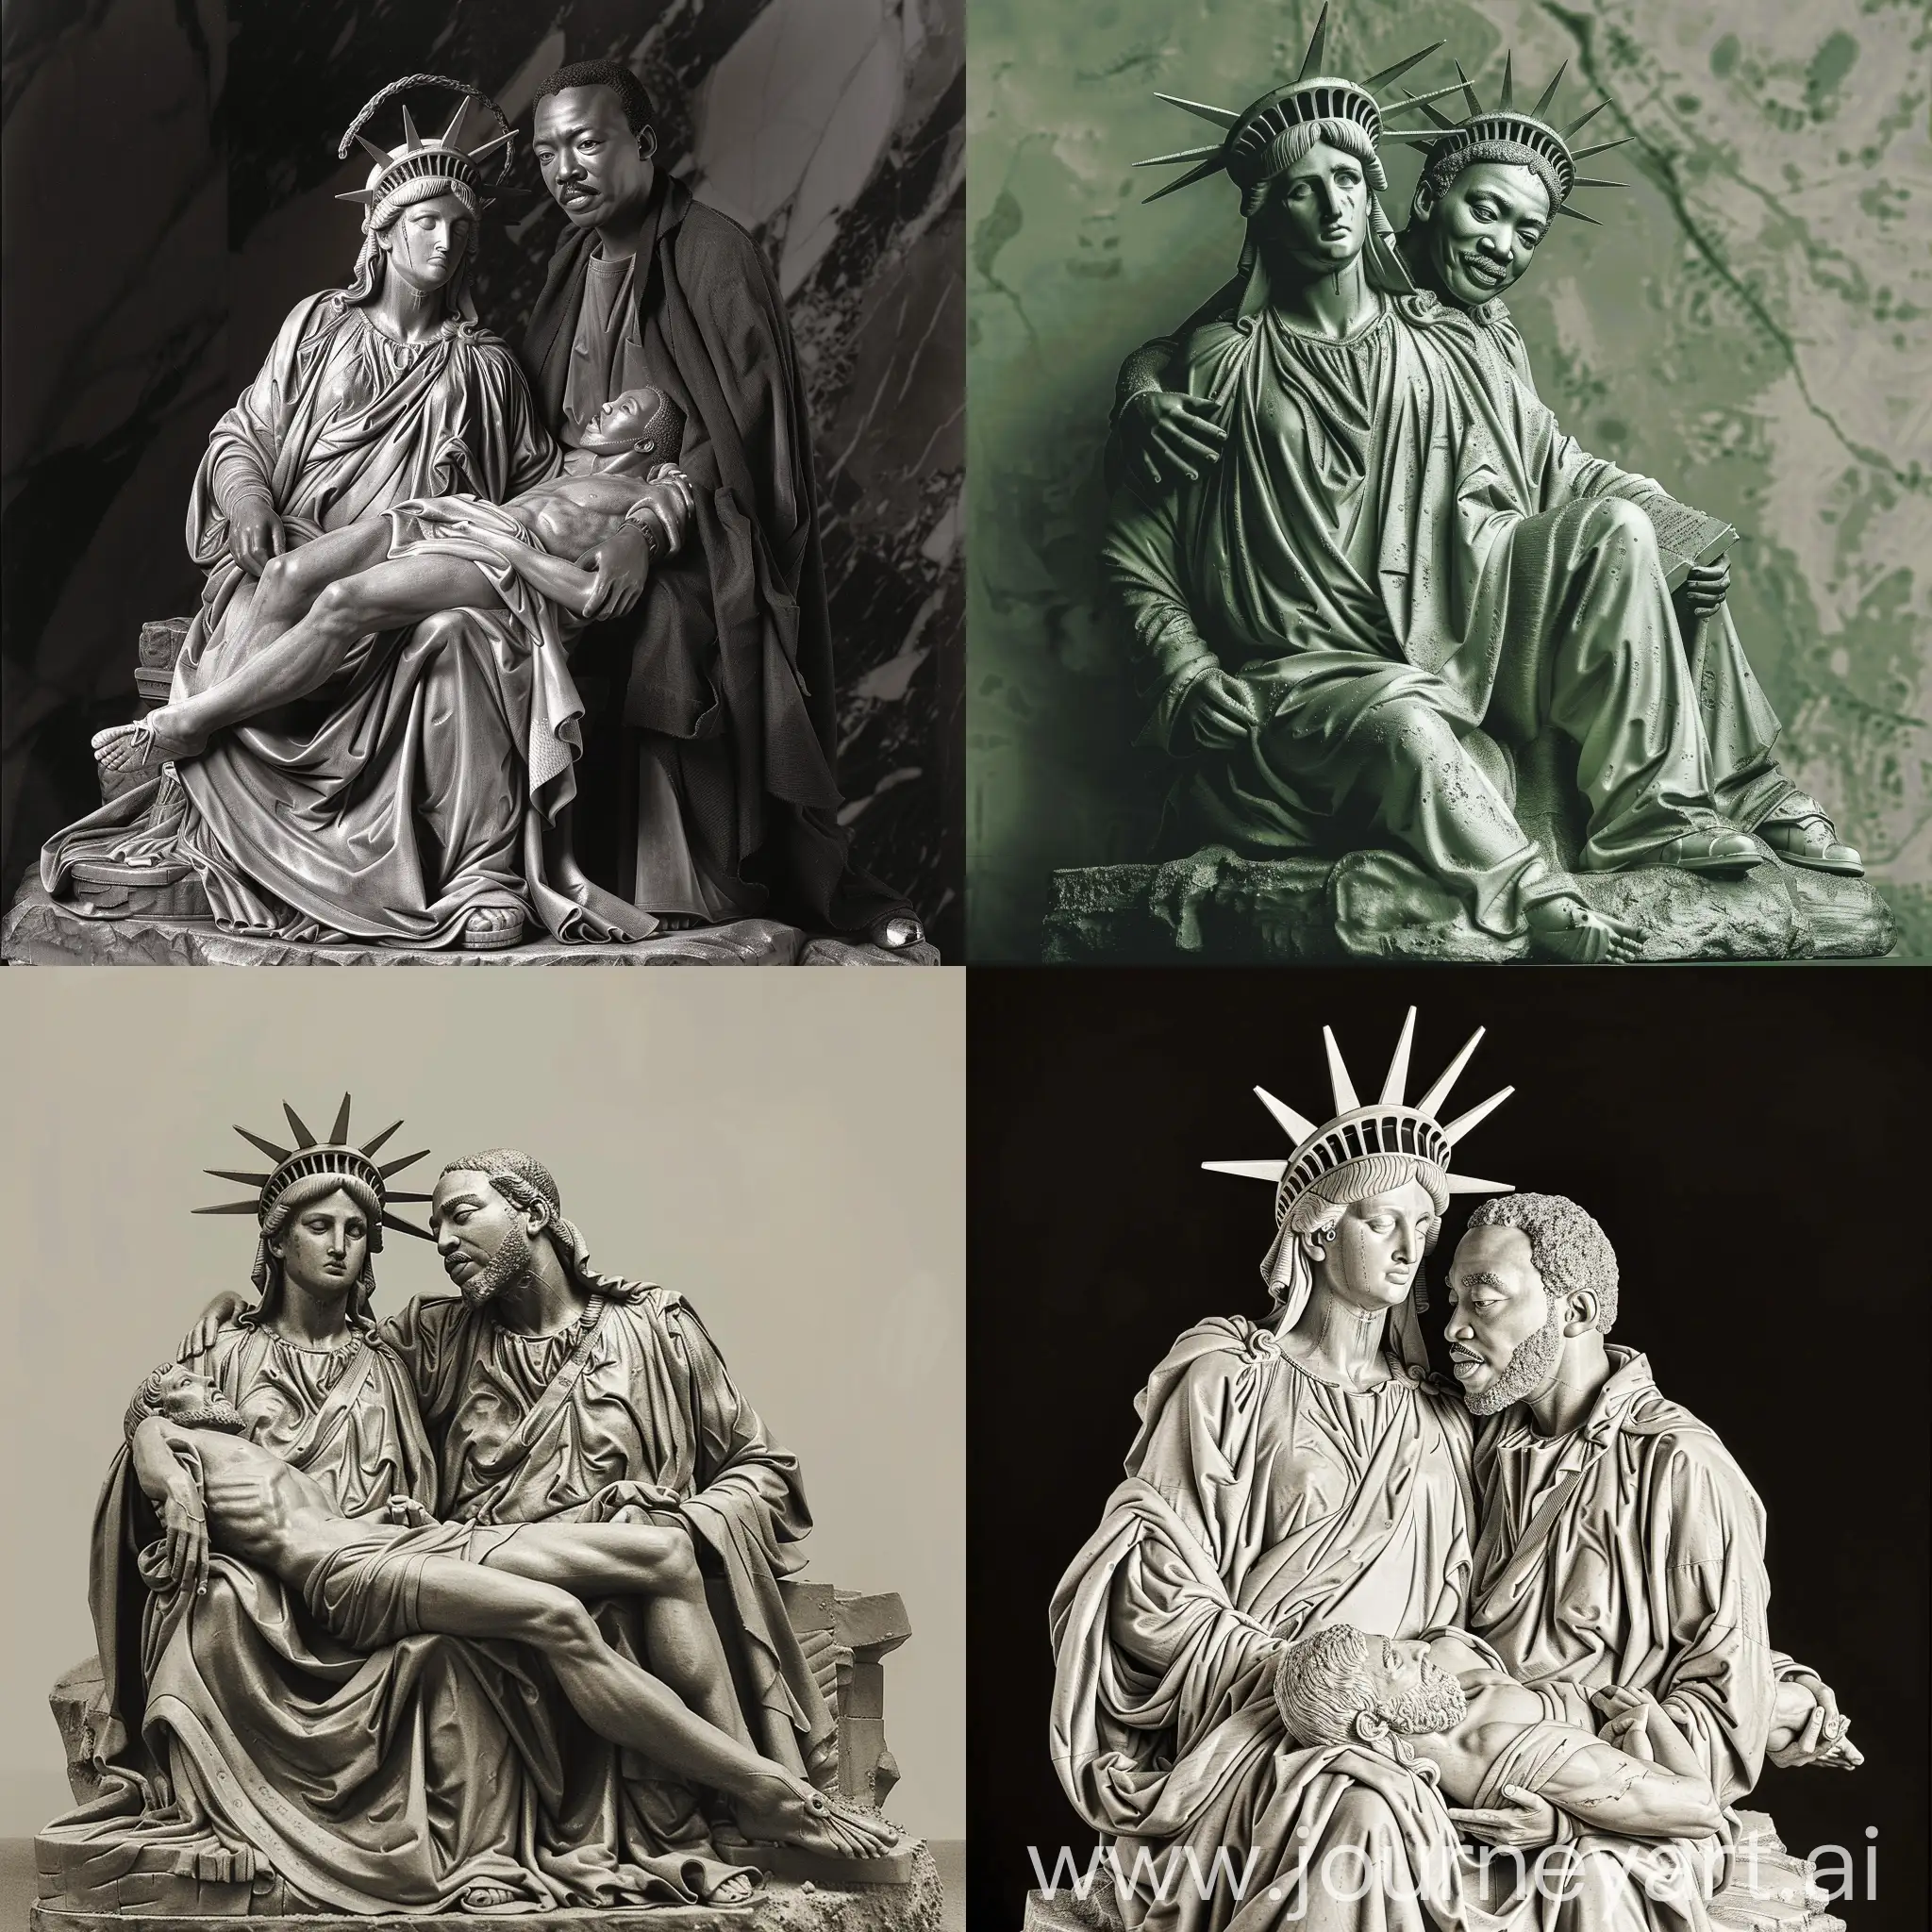 Pieta, Statue of Liberty as Madonna, Martil Luther King as Jesus, Pieta